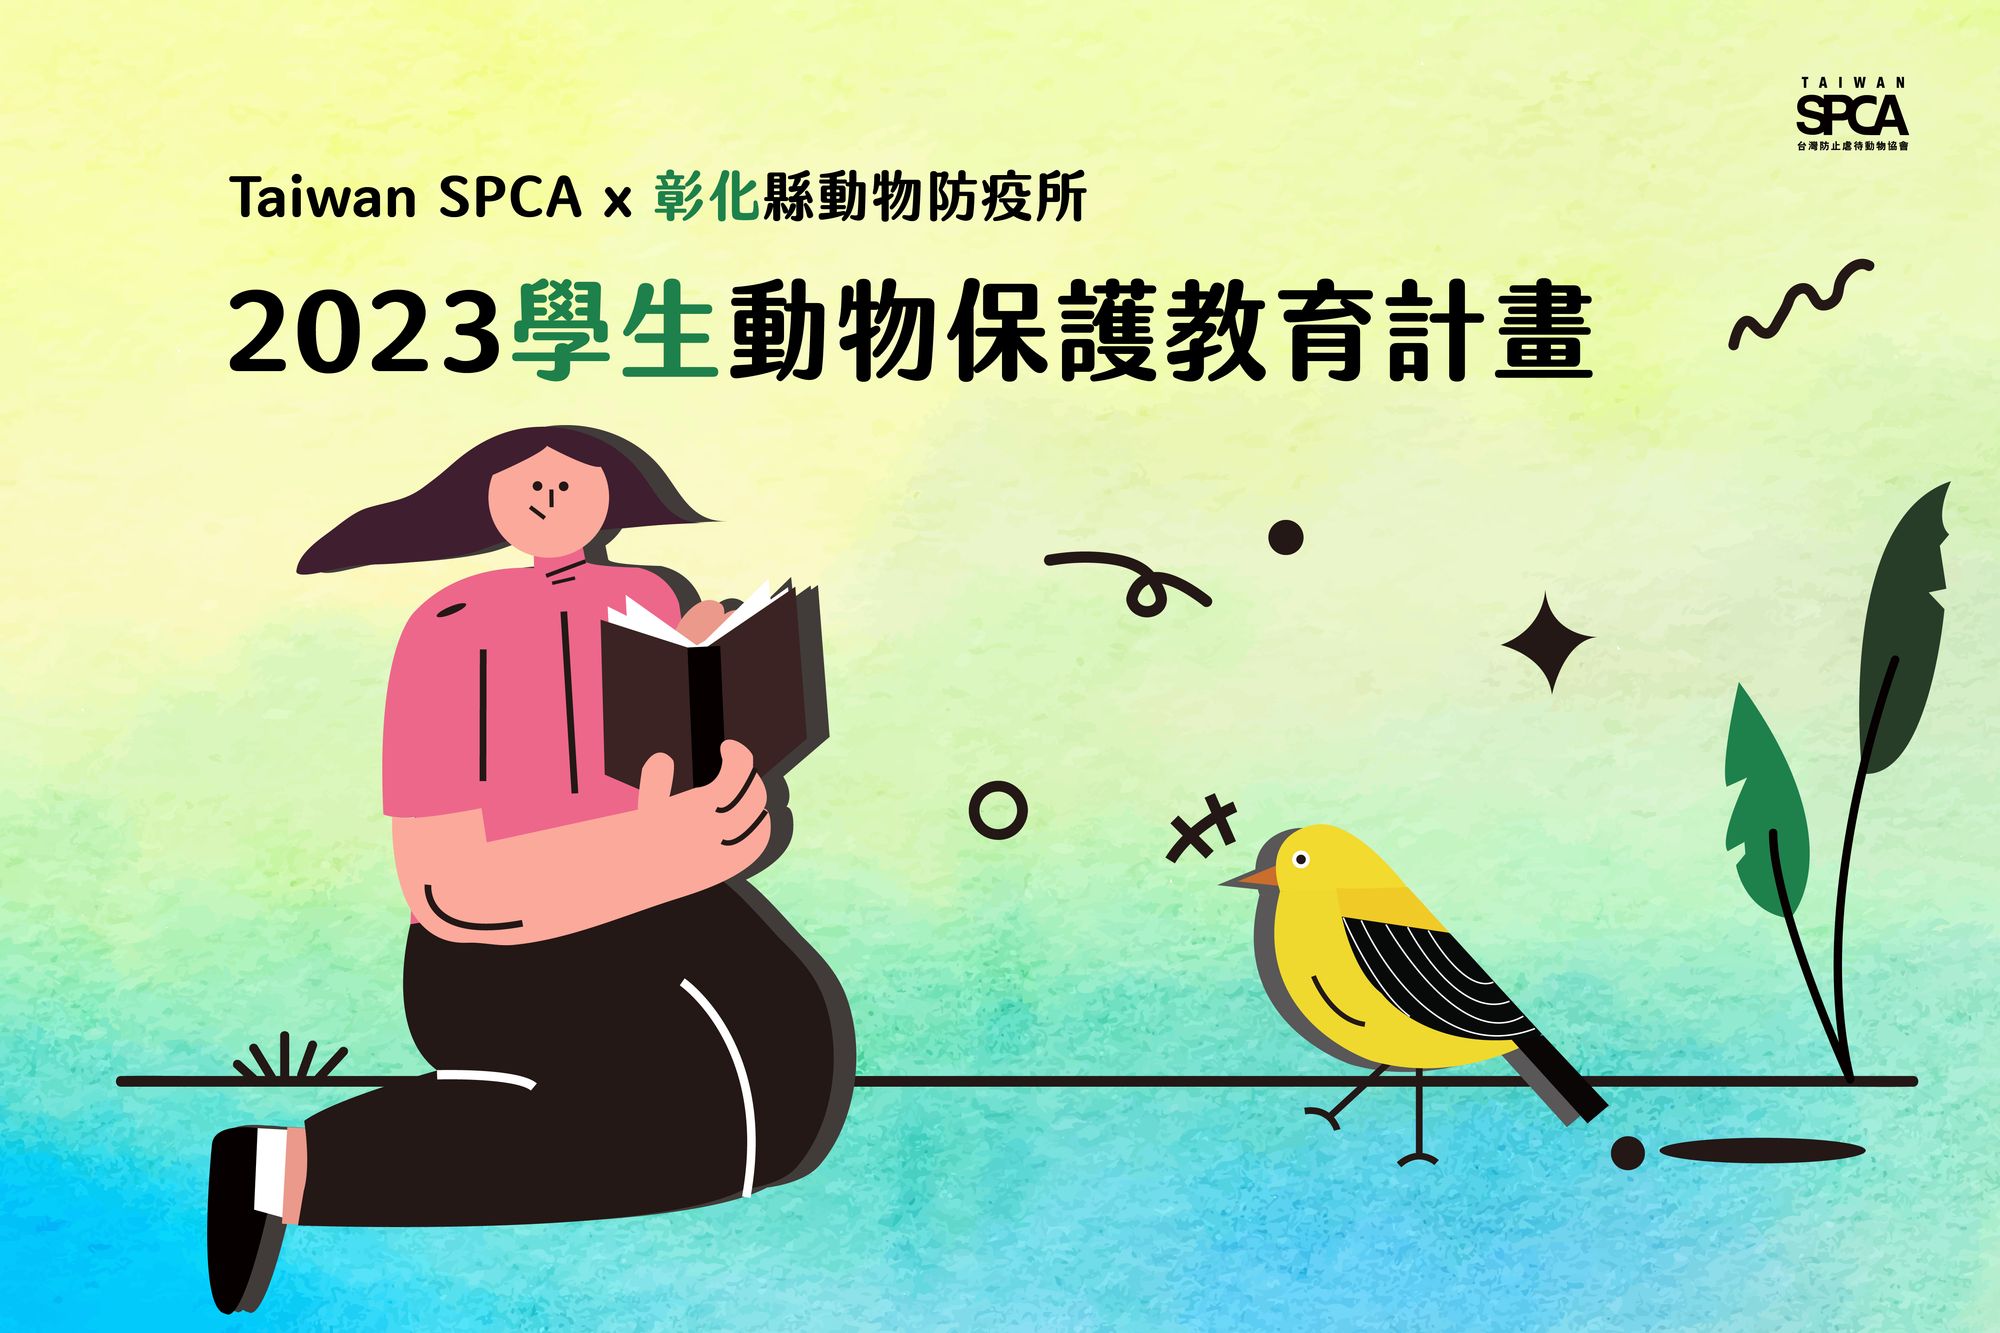 【Taiwan SPCA x彰化縣動物防疫所 2023「學生」動物保護教育計畫】開放報名啦！